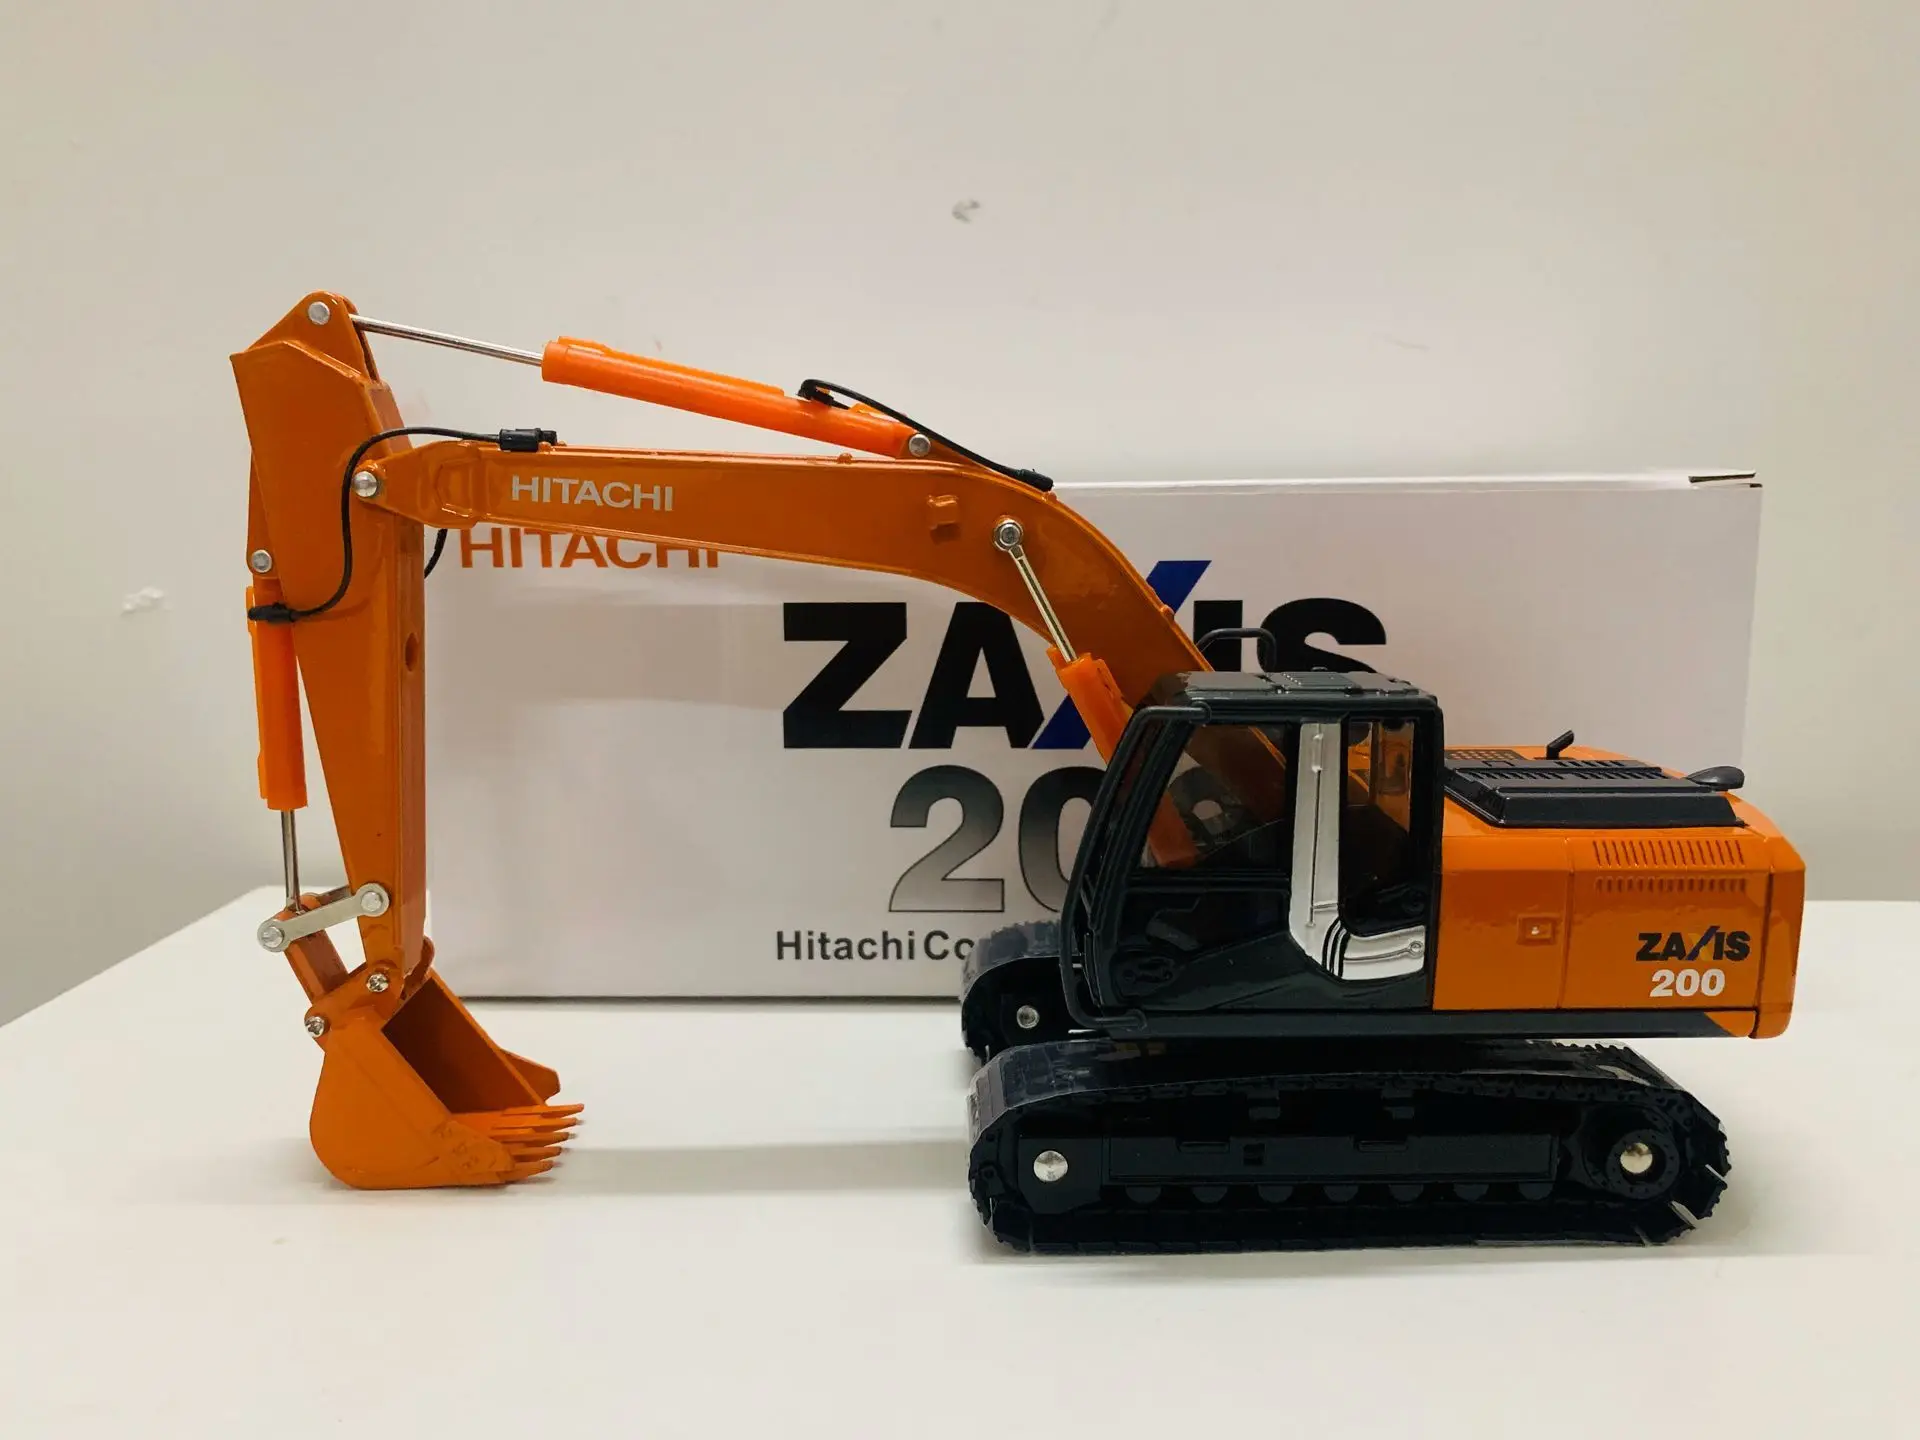 Zaxis200 Hydrauric Excavator 1/40 Scale Die-Cast Model New in Original Box